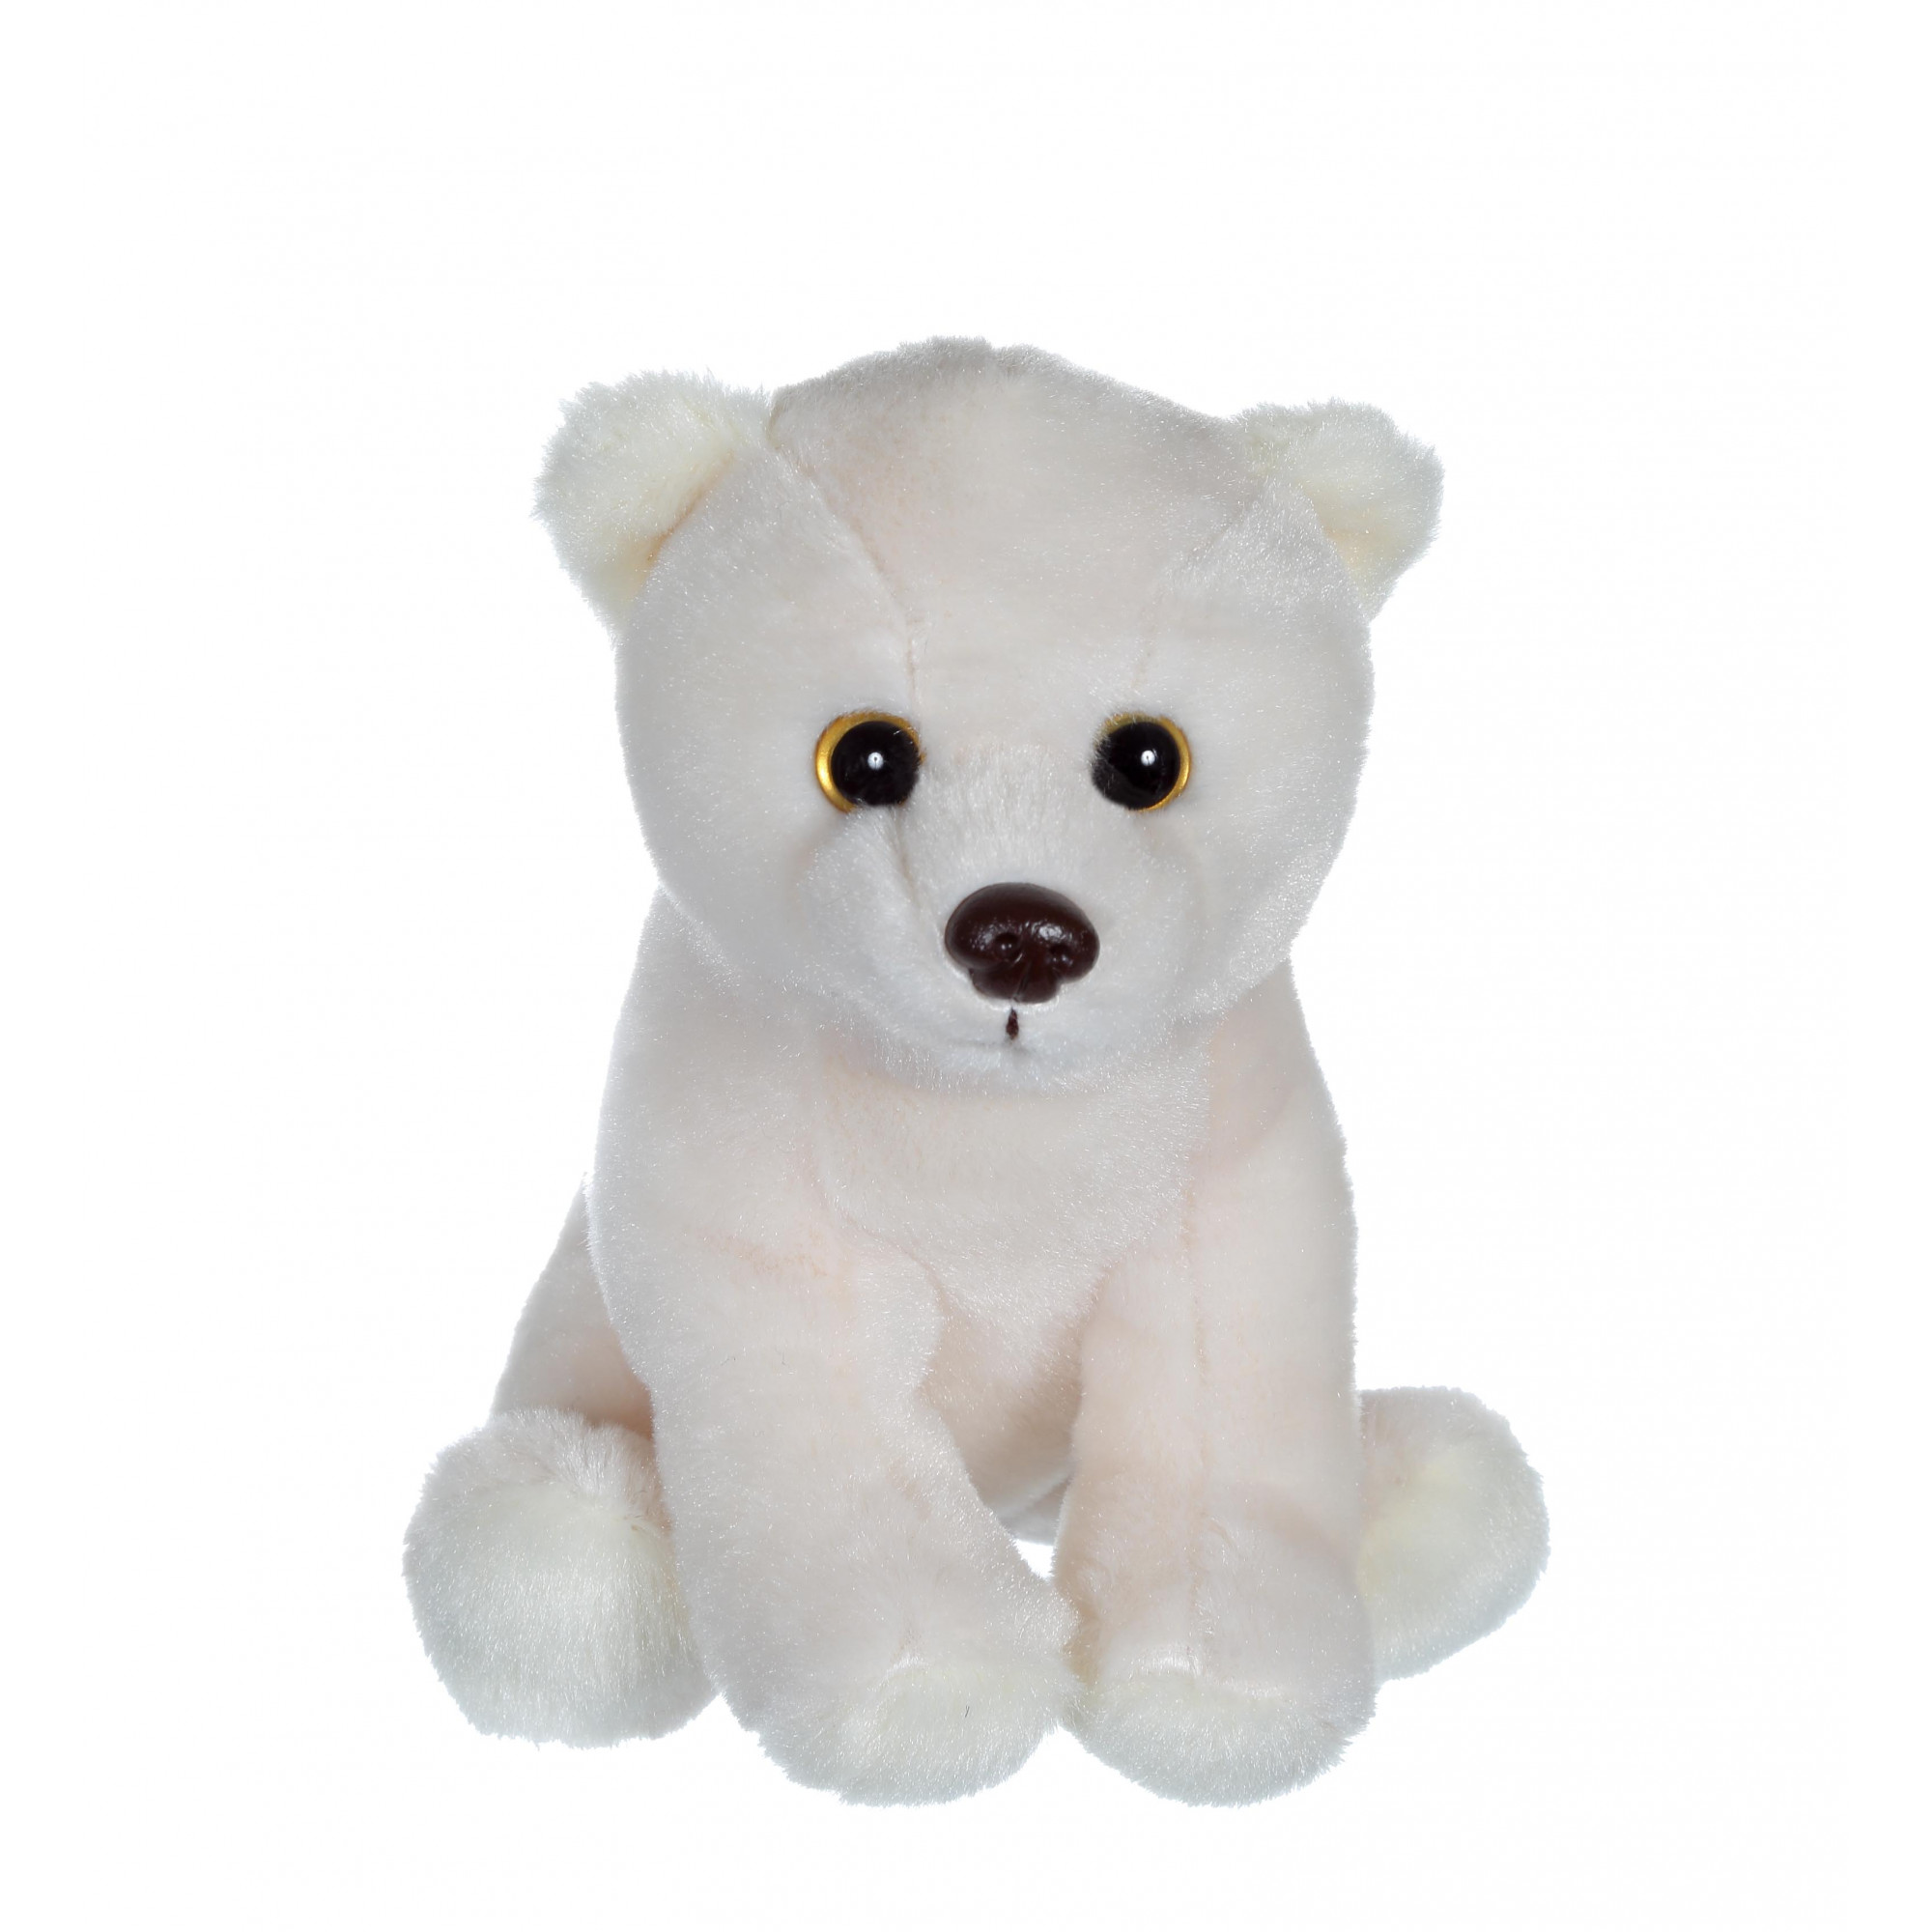 P'tits sauvageons 15 cm - white bear